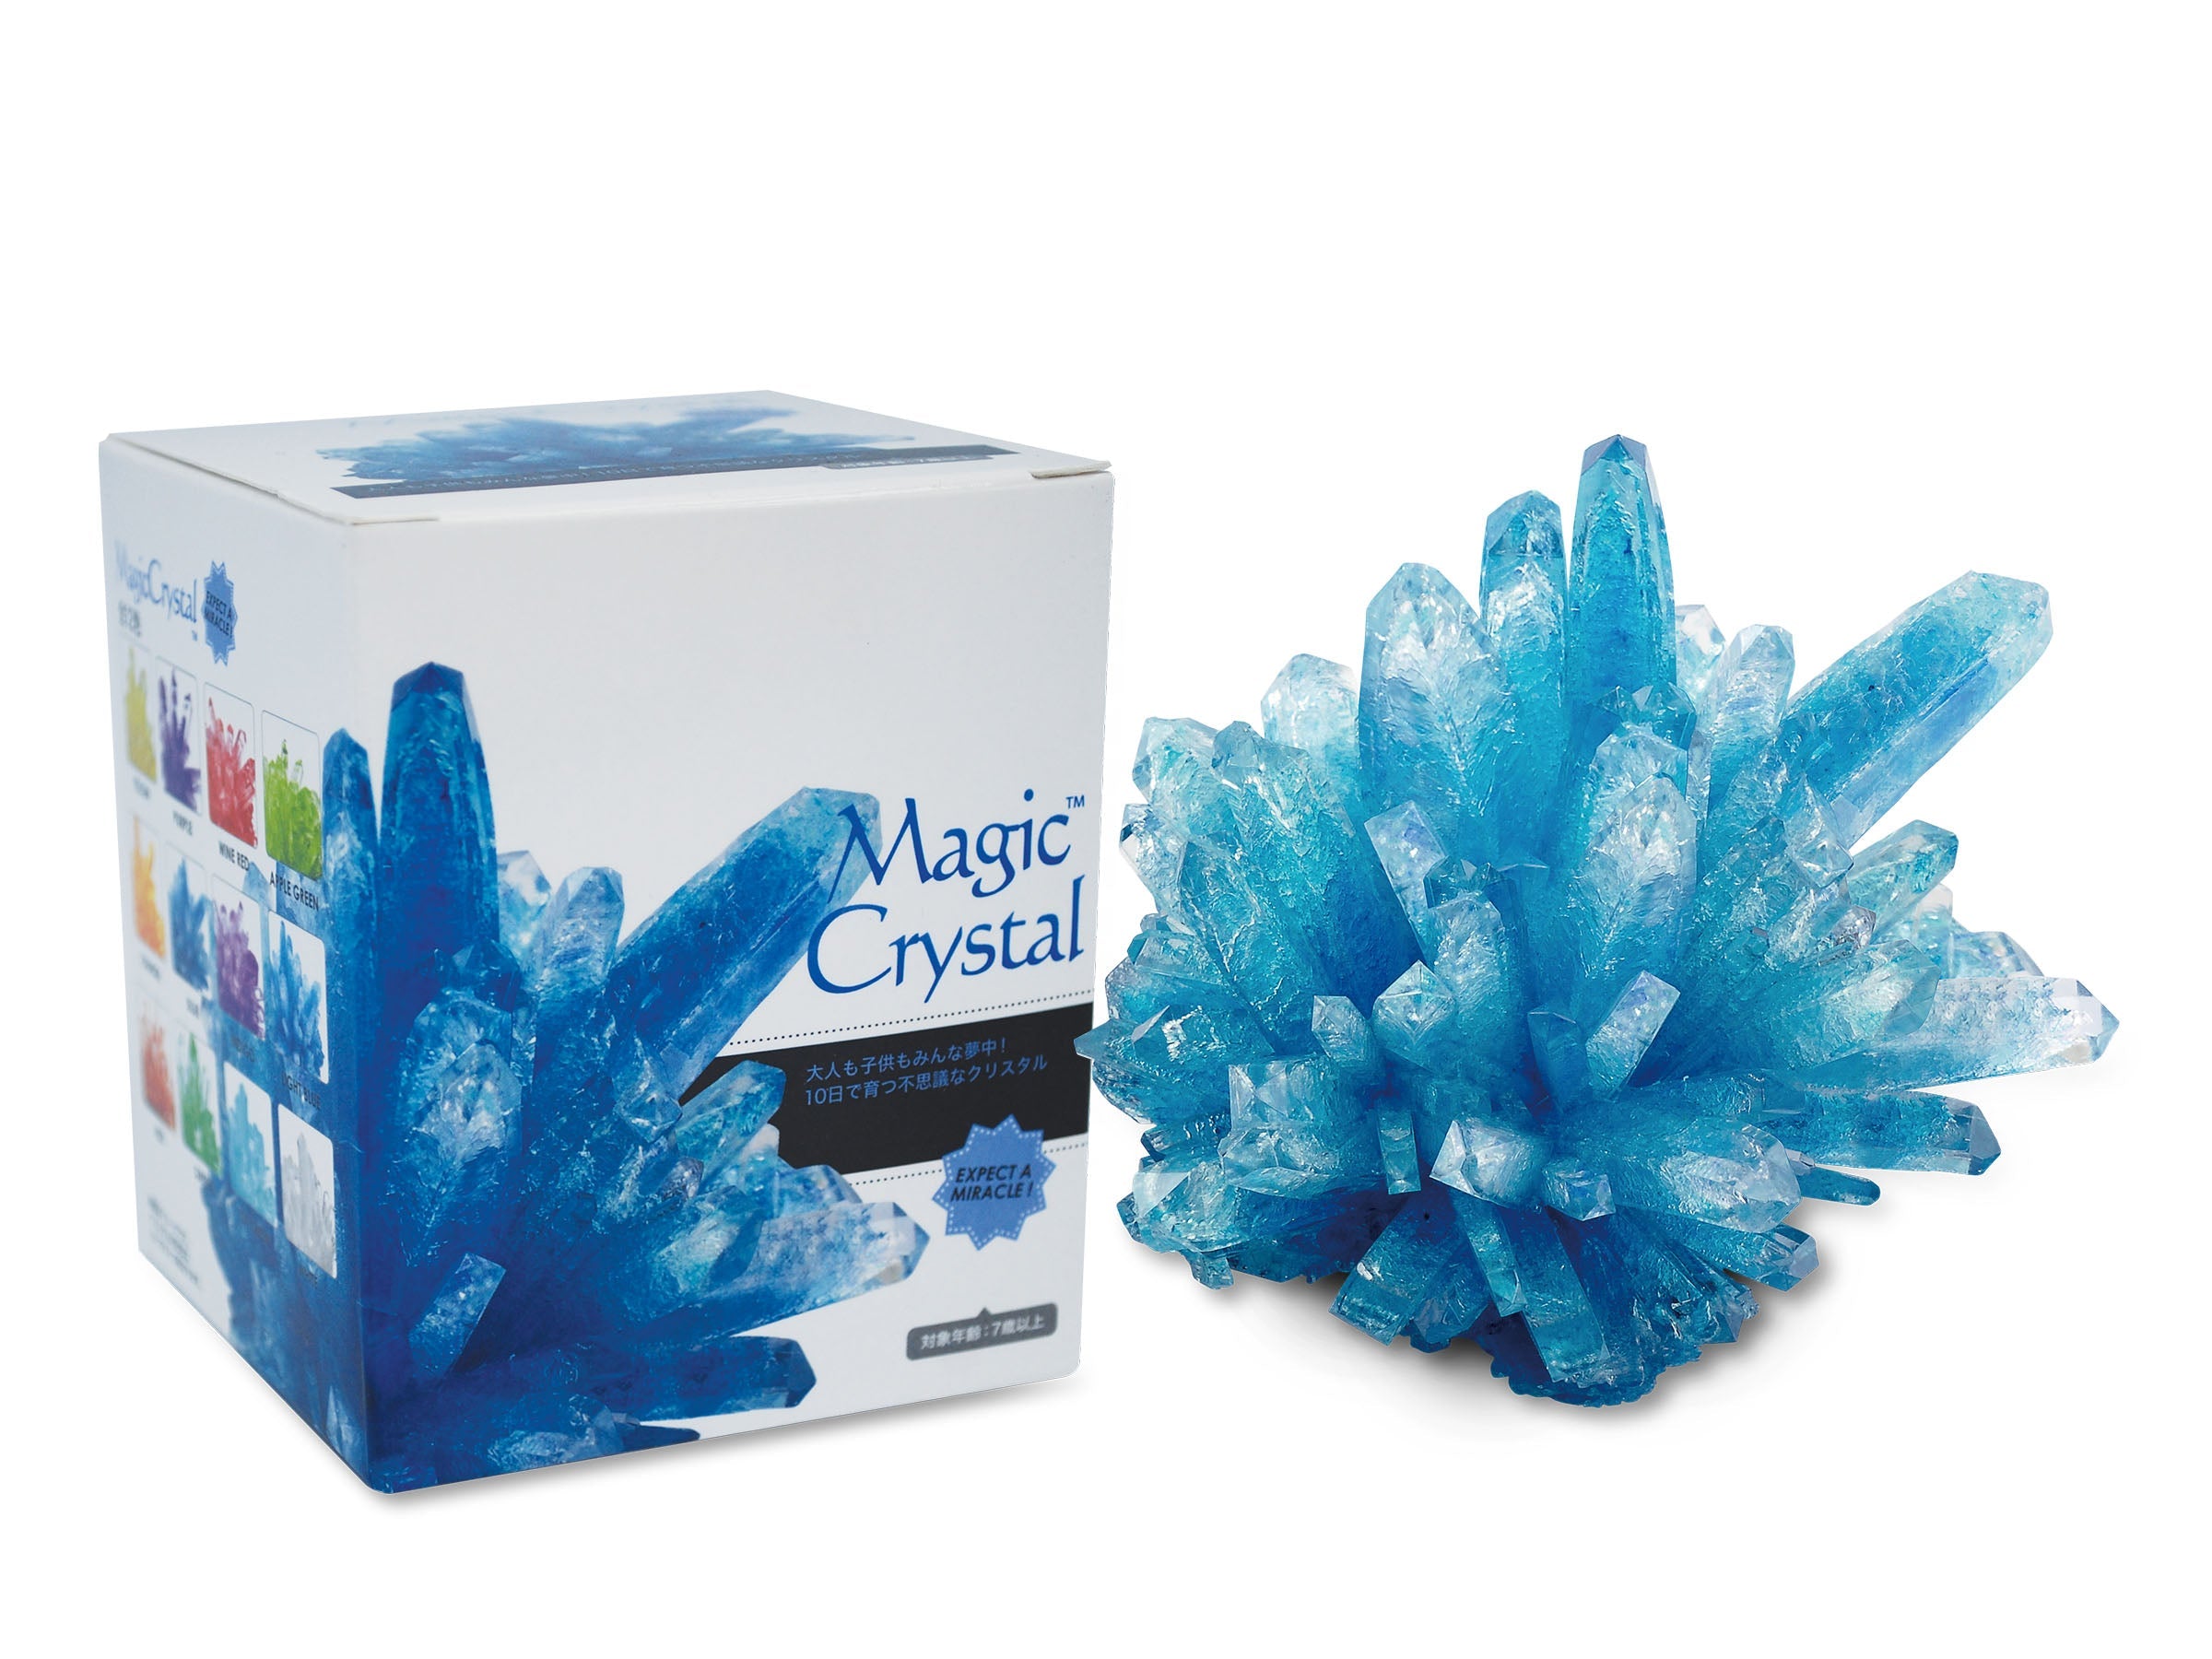 Magical Crystal - Aquamarine Blue